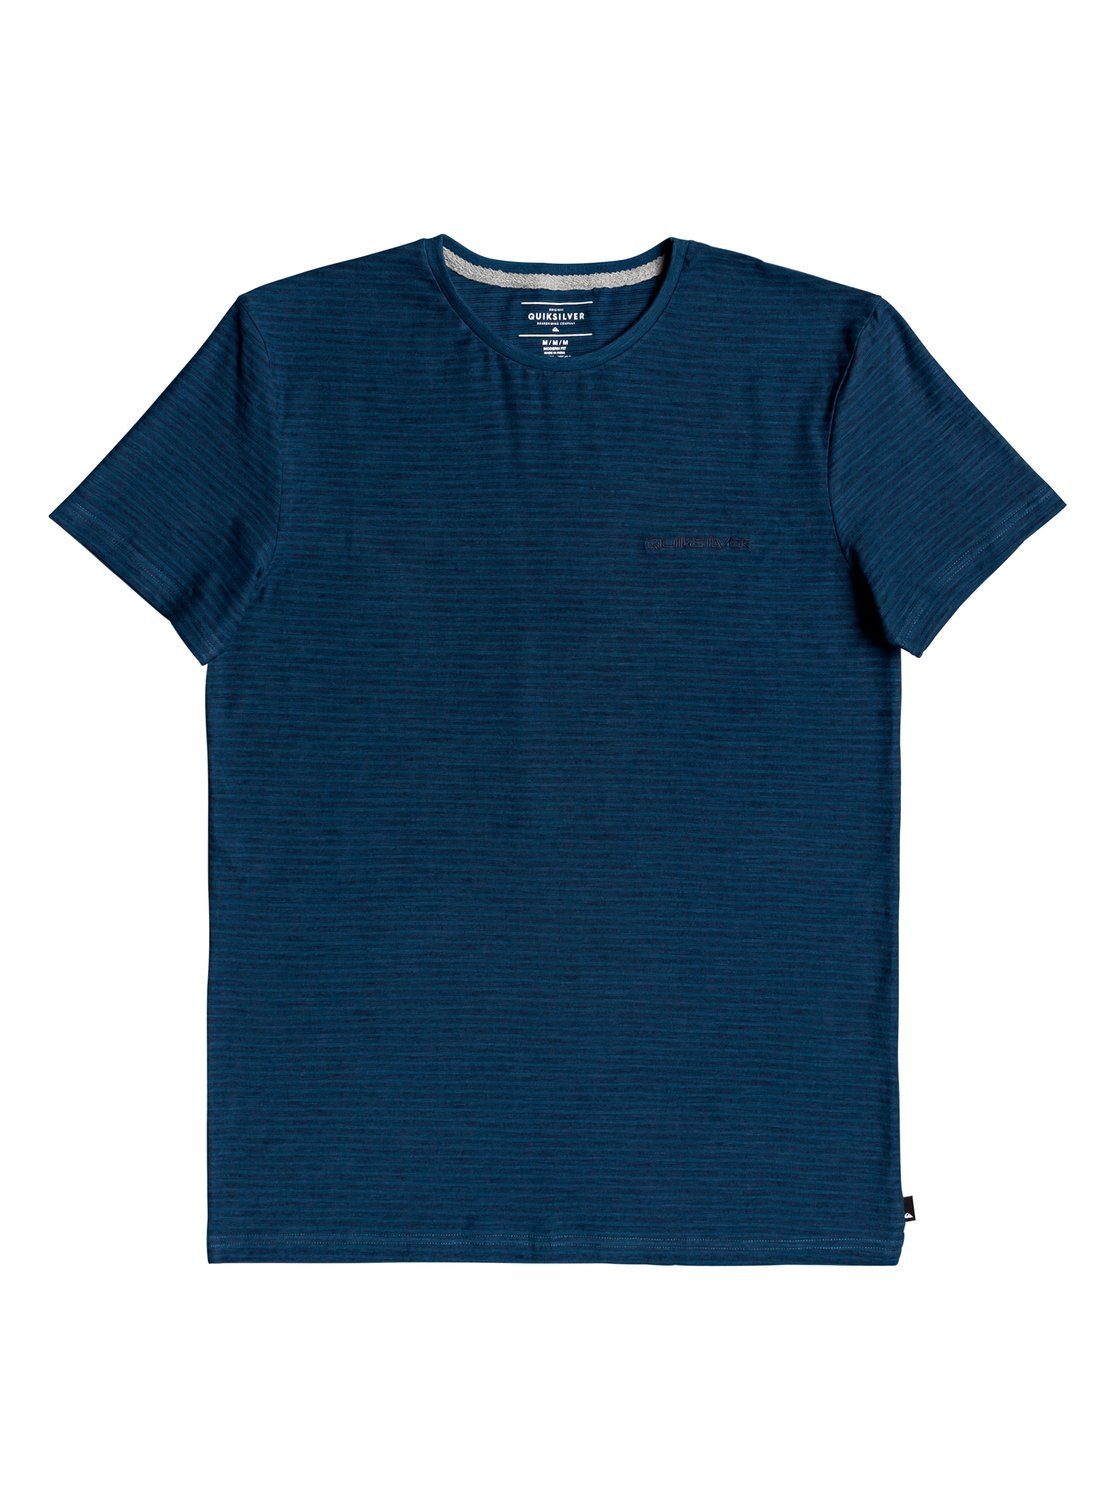 Quiksilver T-Shirt Kentin Majolica Blue Kentin